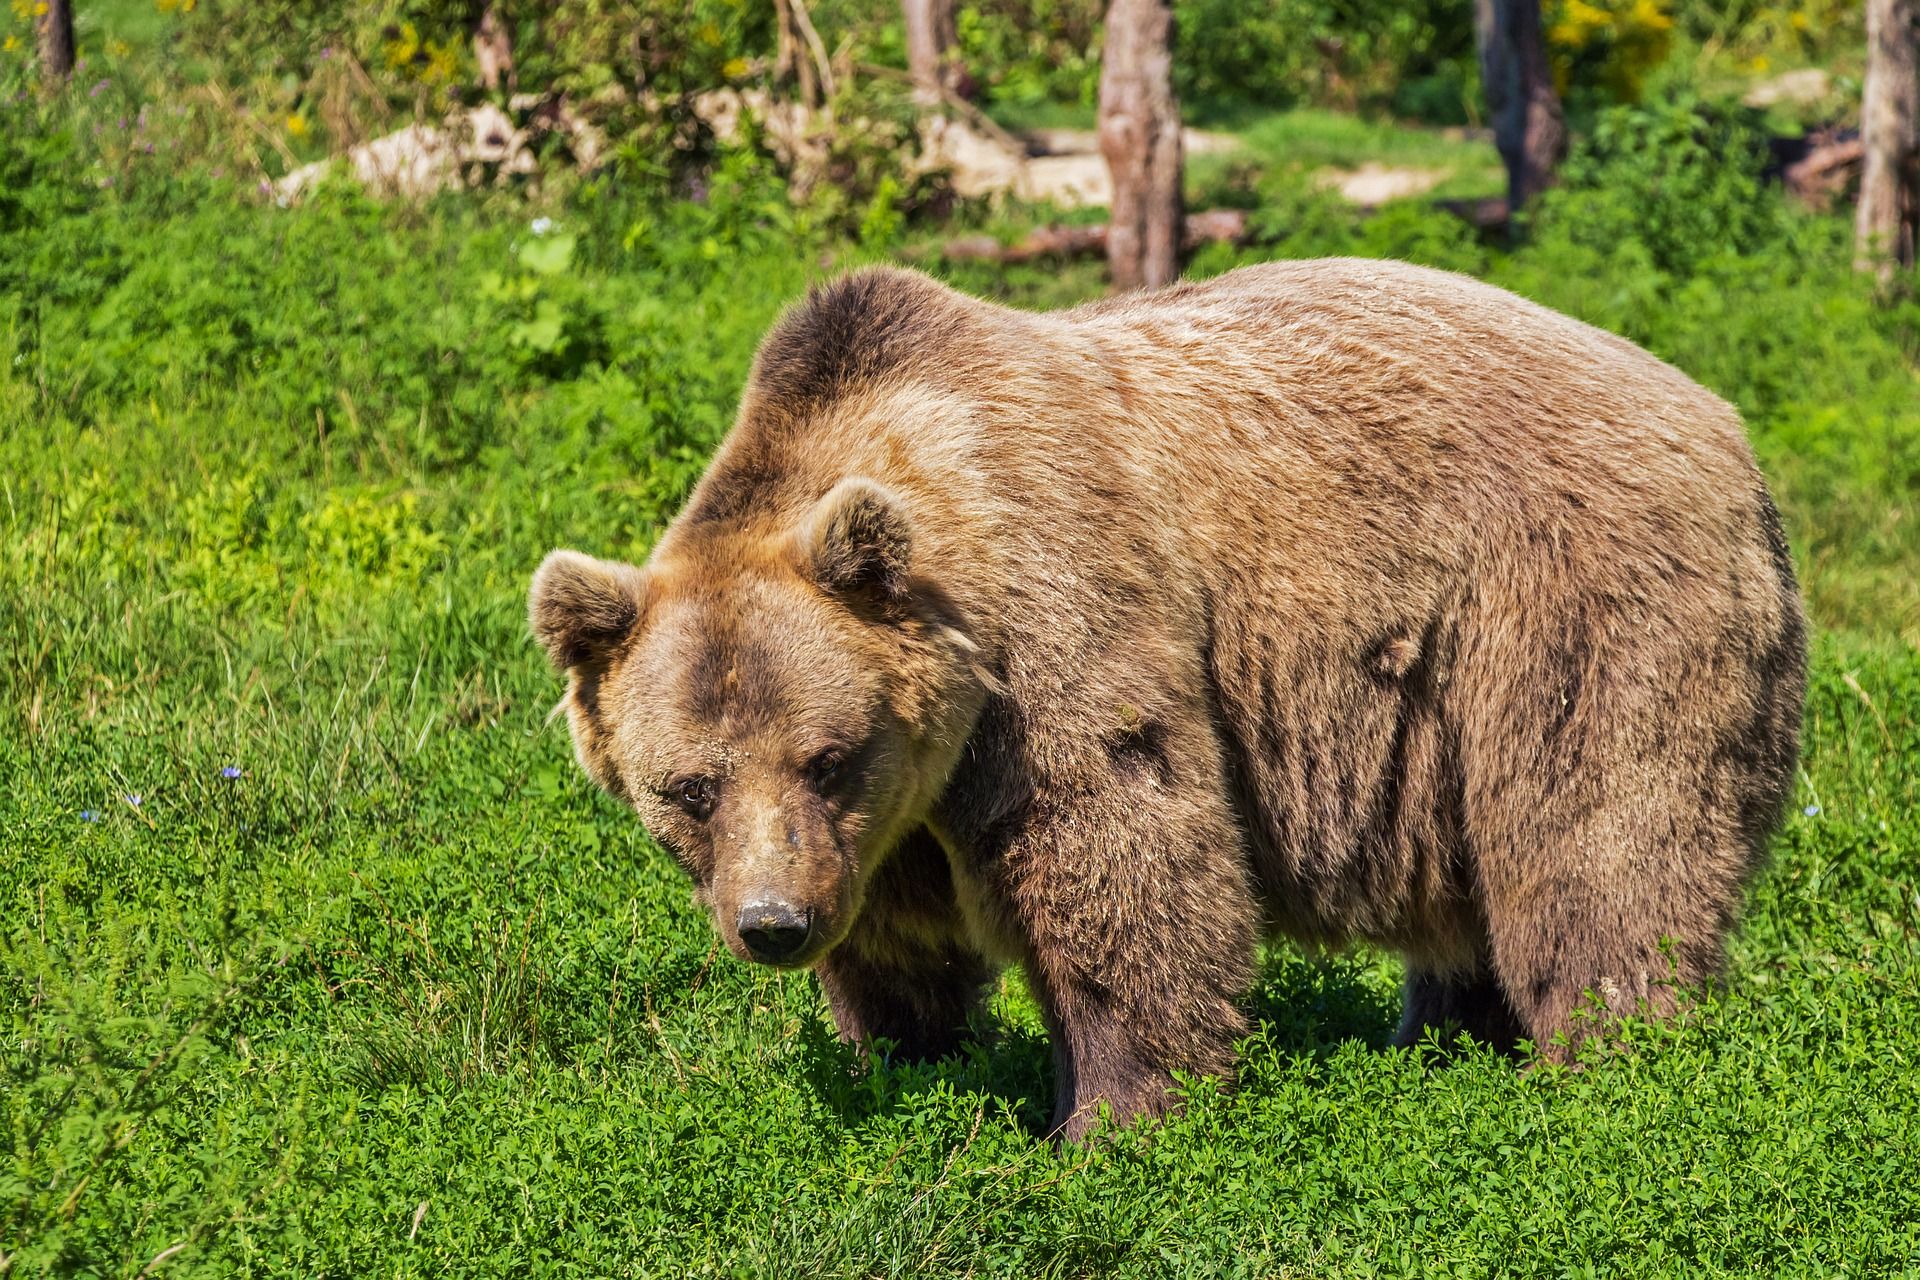 Alaska plane hits a bear while landing, passengers safe